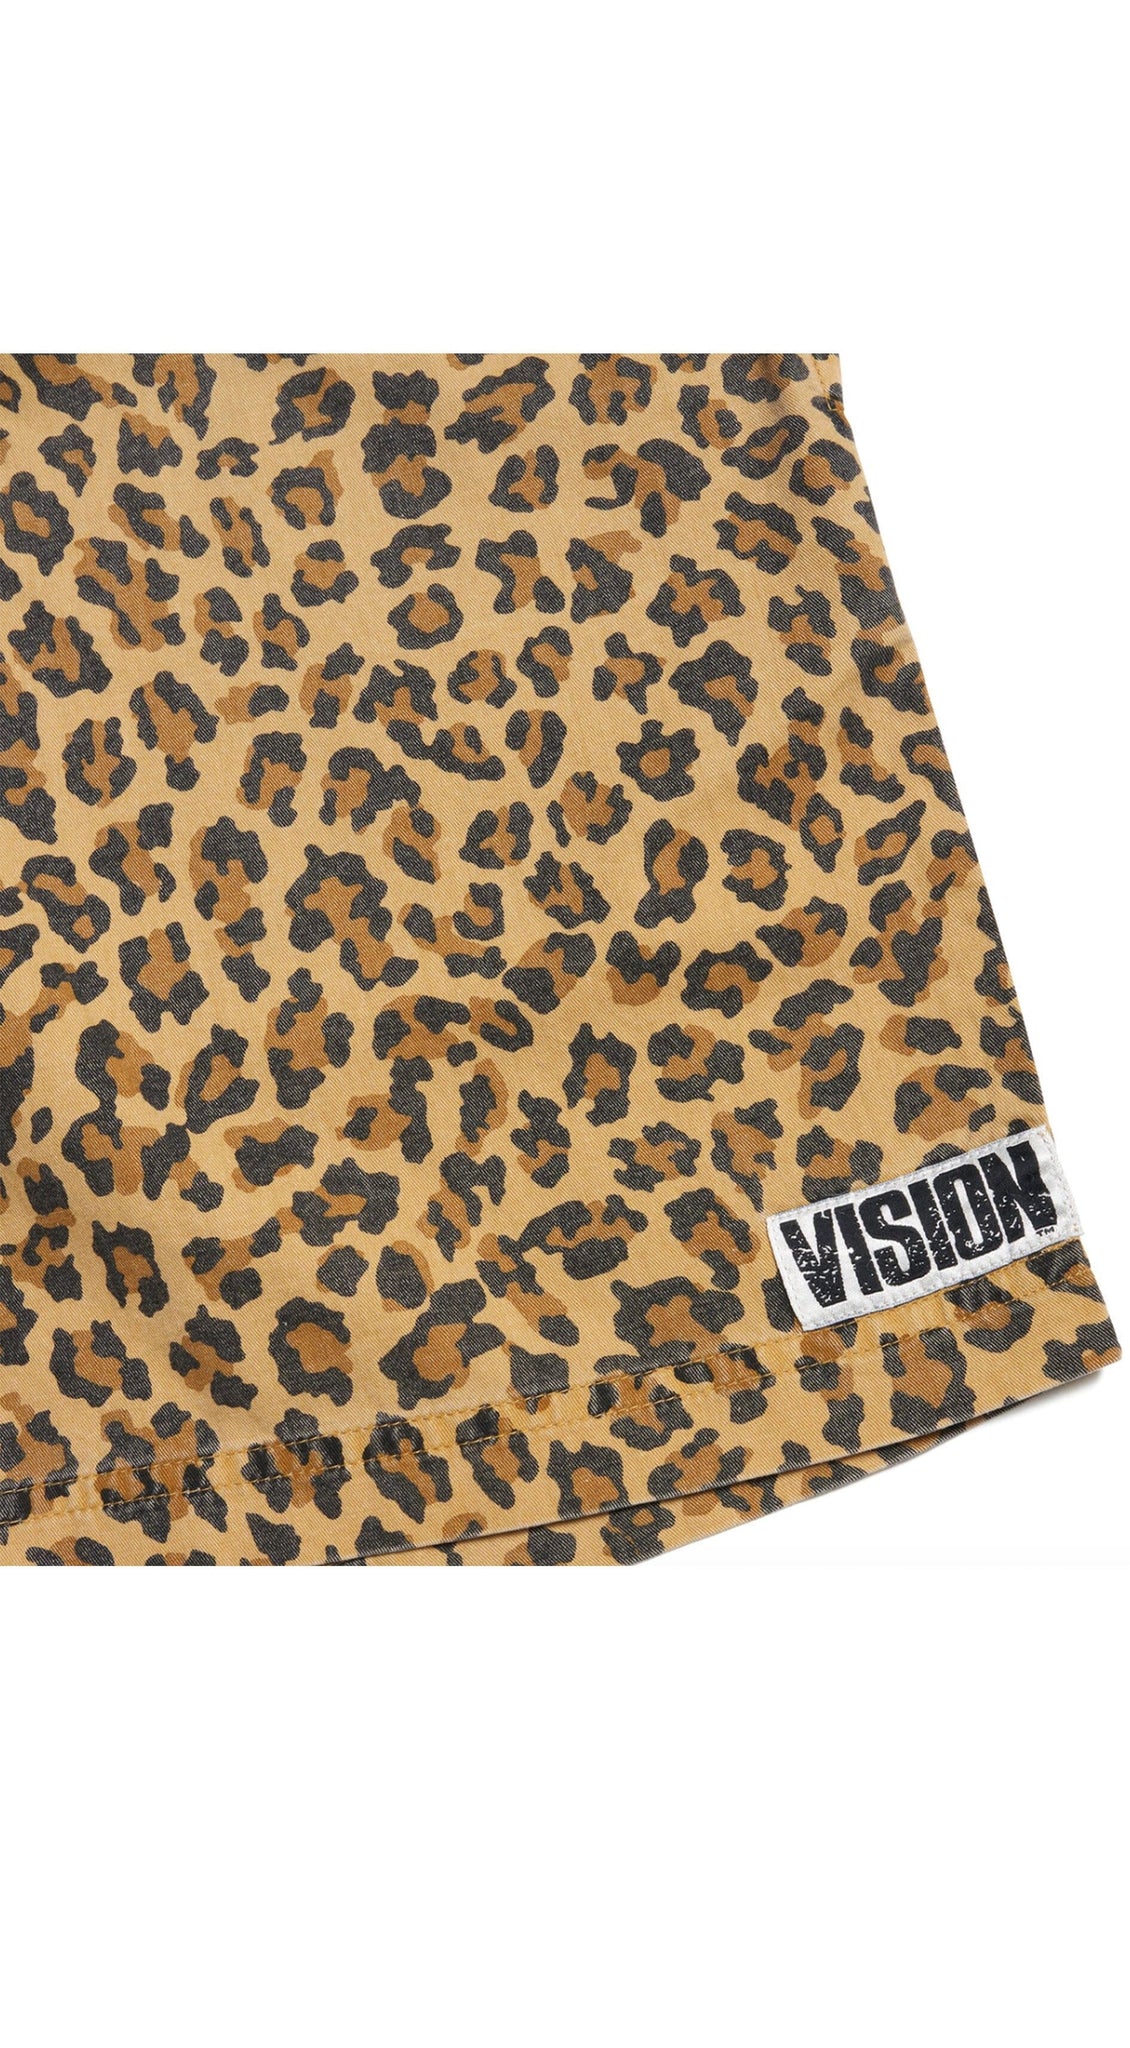 Vision Street Wear 'JINX' Leopard Beach Short - Pantalon Ropa Vision Skateboards 